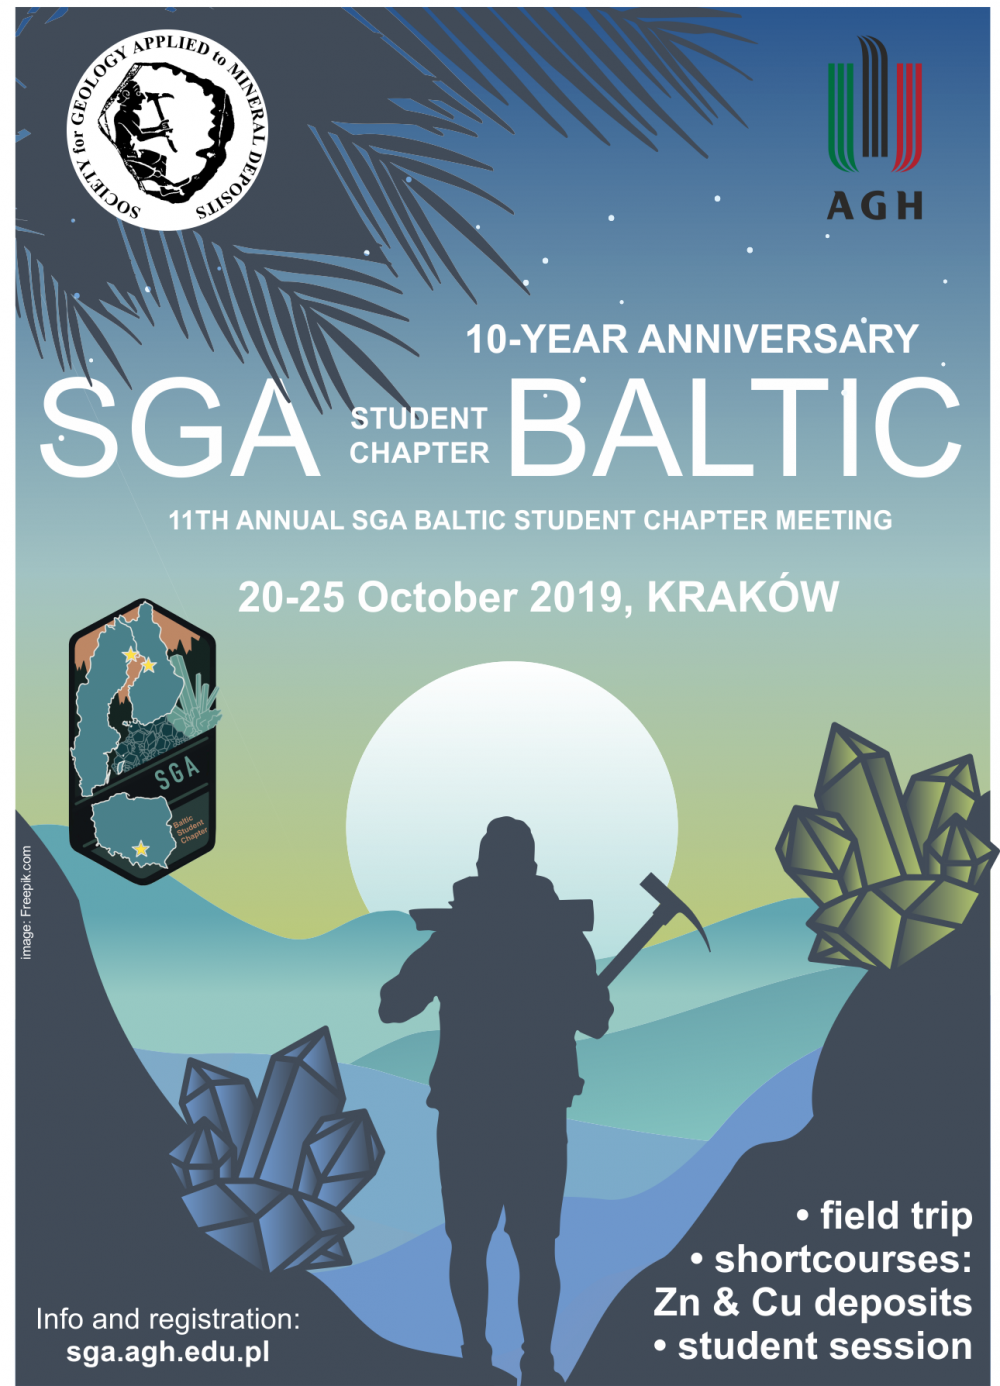 10-year anniversary of SGA Baltic student chapter